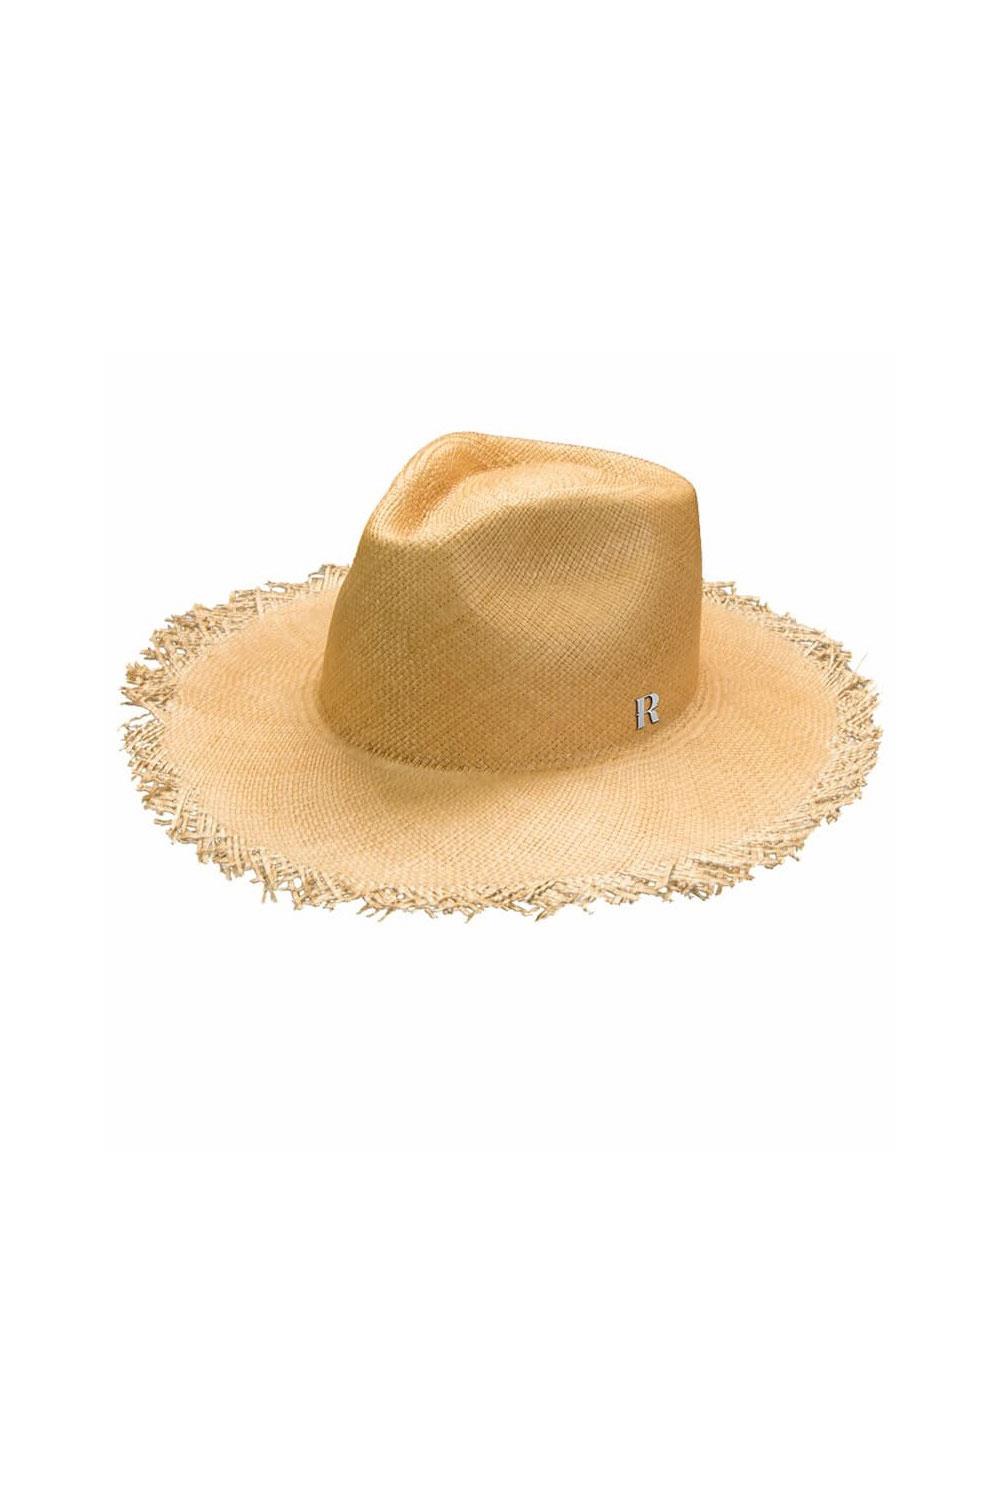 look luna de miel playa alexandra pereira sombrero-panama-deshilachado-grant-avellana Raceu Atelier, 85,00€